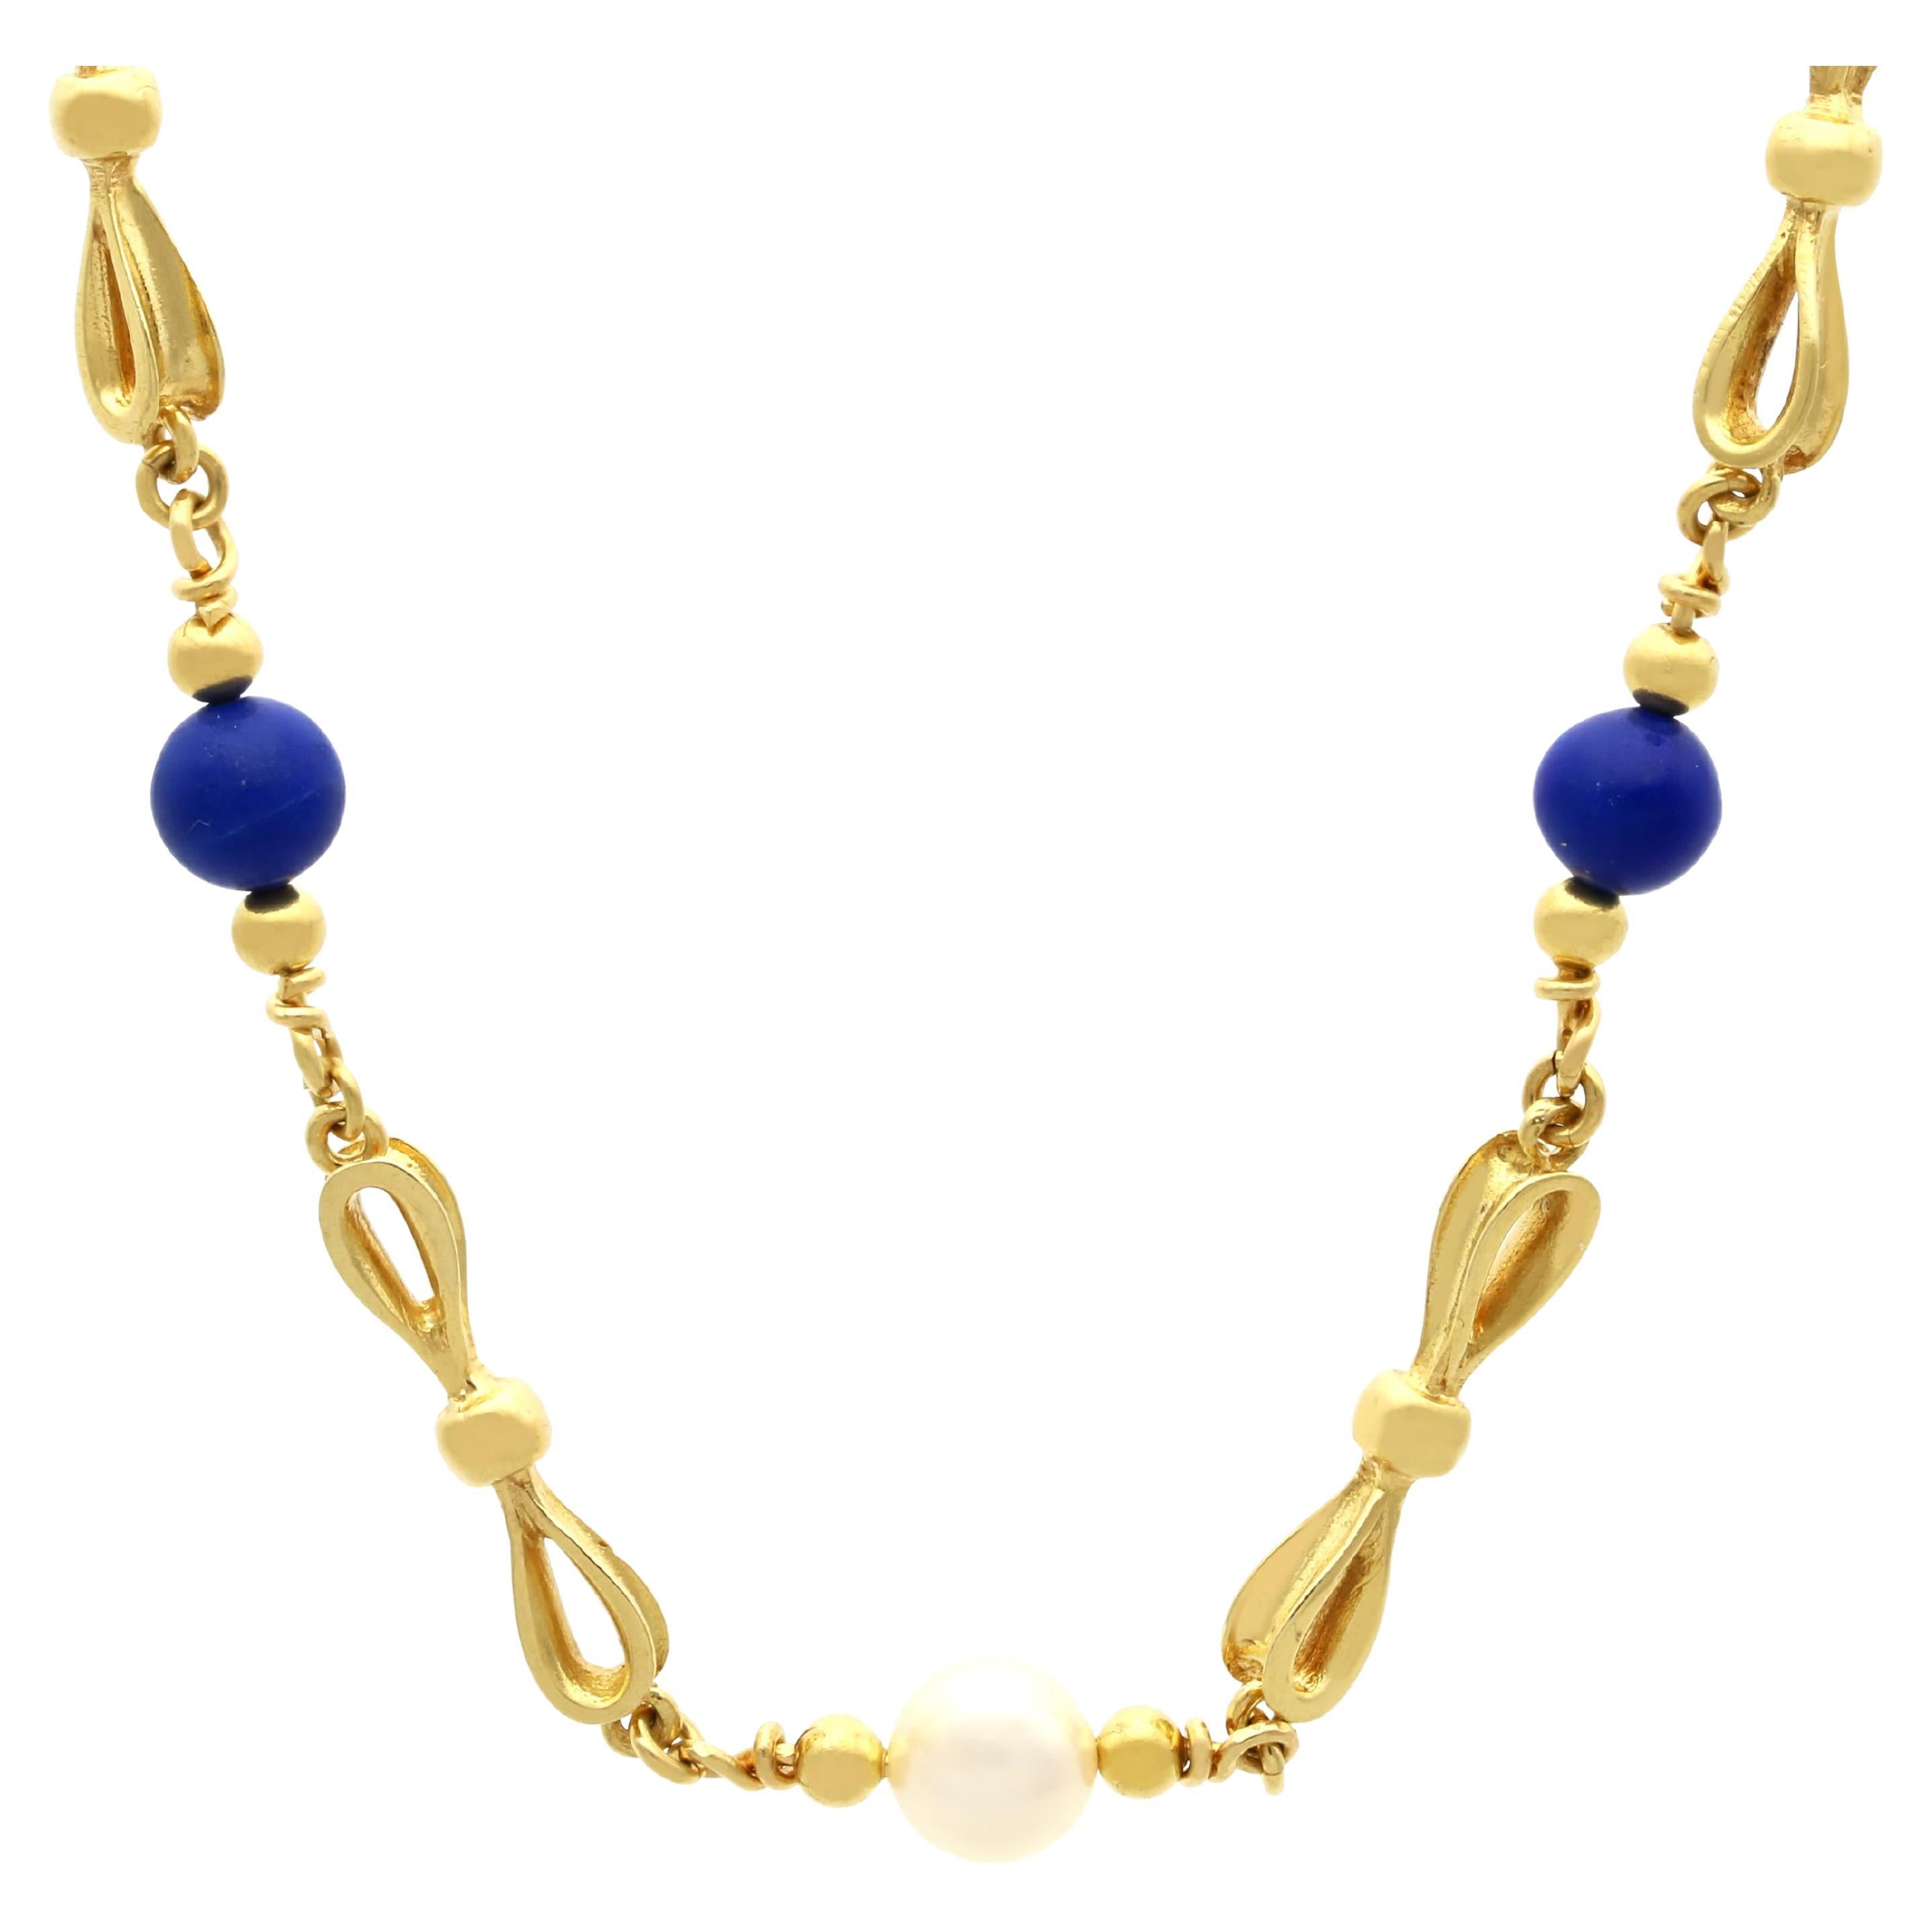 Vintage 7,80 Karat Lapislazuli-Lapislazuli  Perlenkette Halskette aus 18k Gelbgold